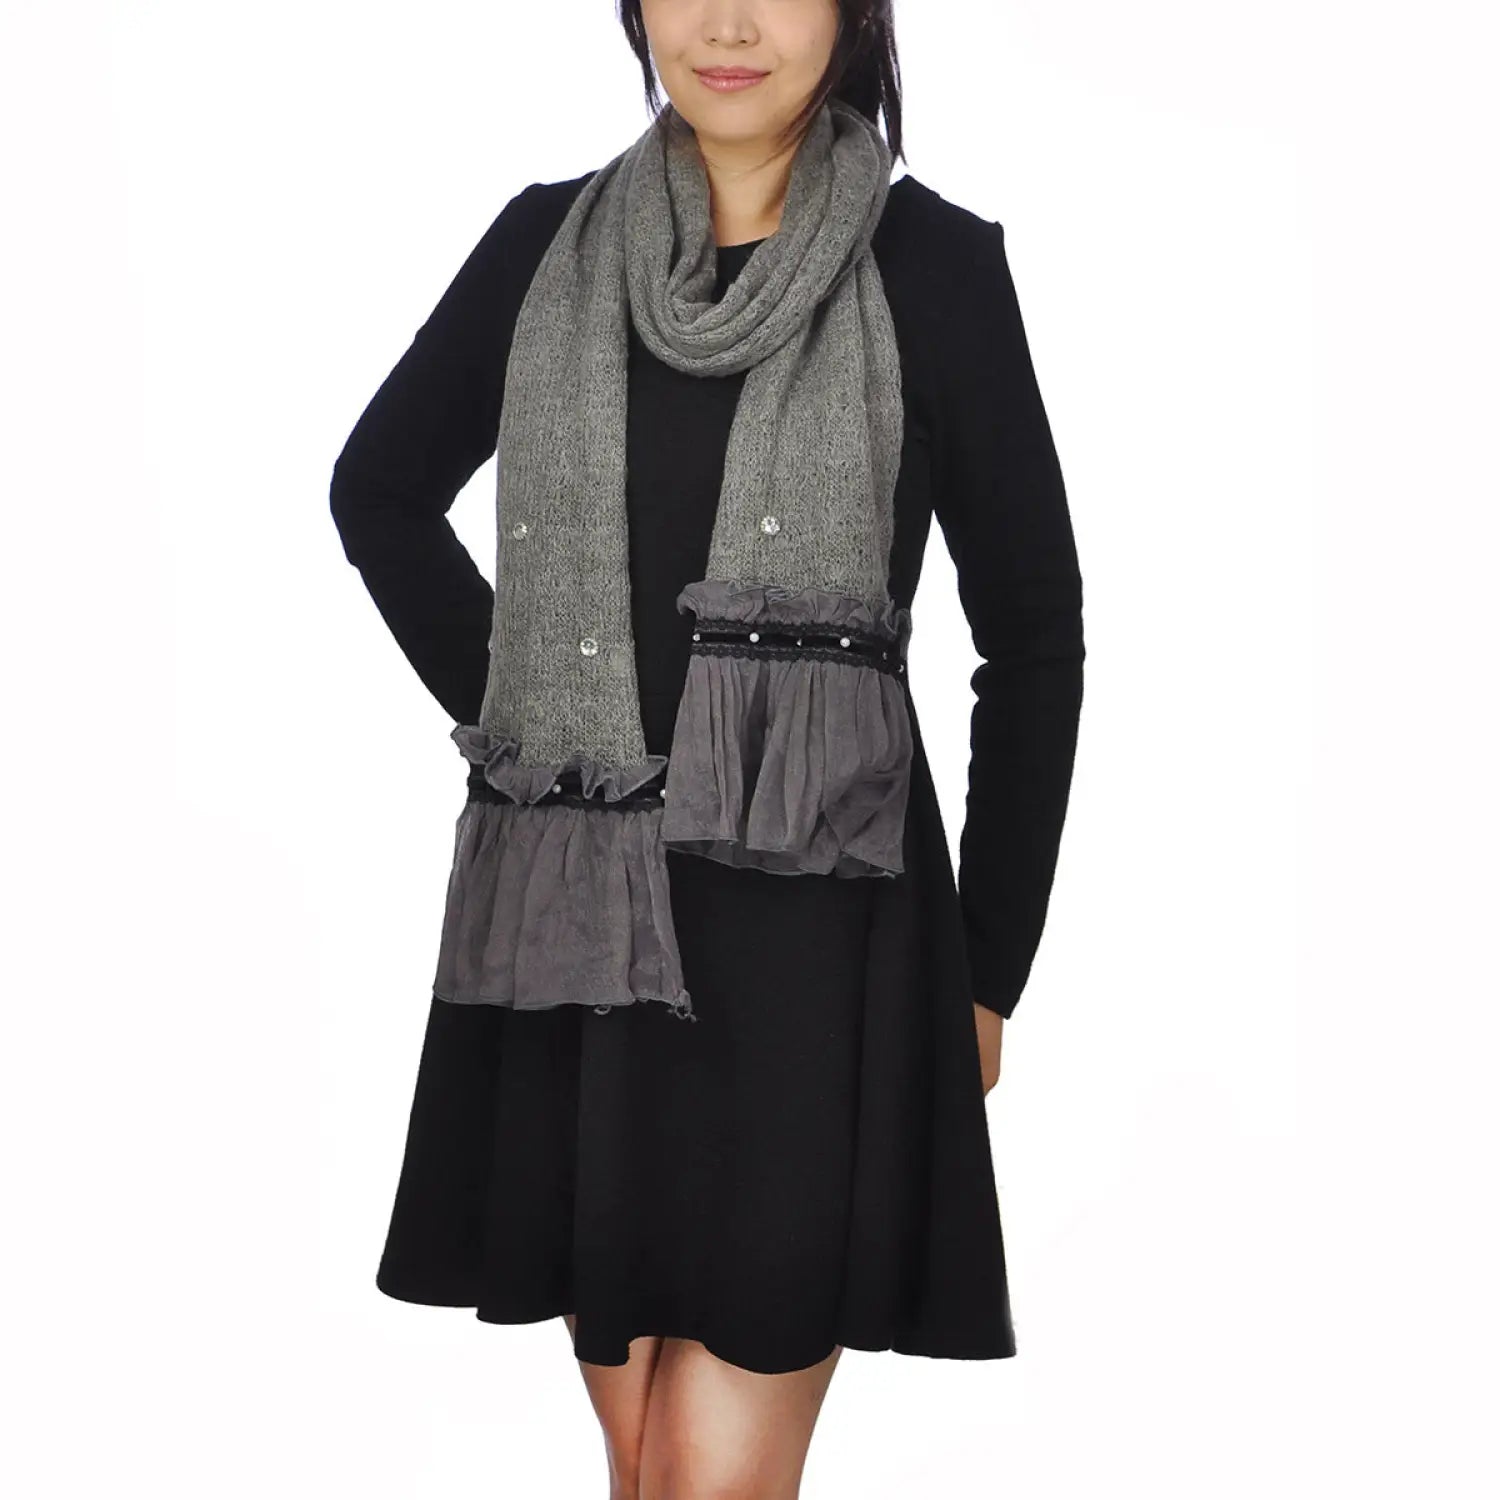 Bohemian retro ruffle winter knit scarf model femme fashion.